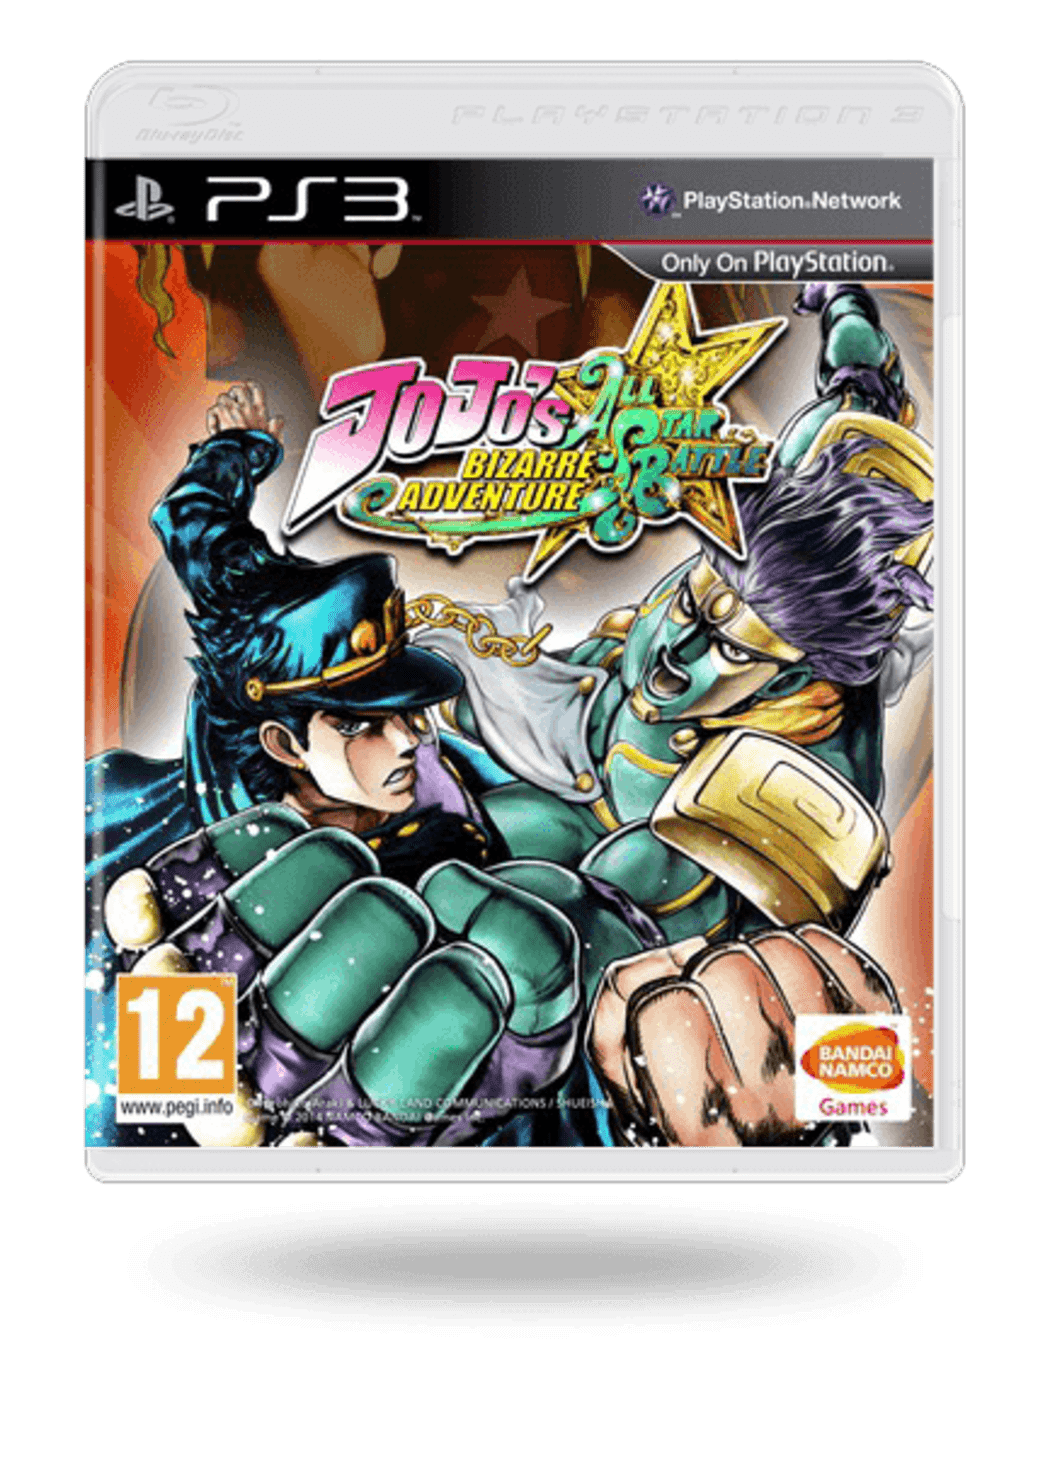 Buy JoJo's Bizarre Adventure: All-Star Battle PS3 CD! Cheap game price